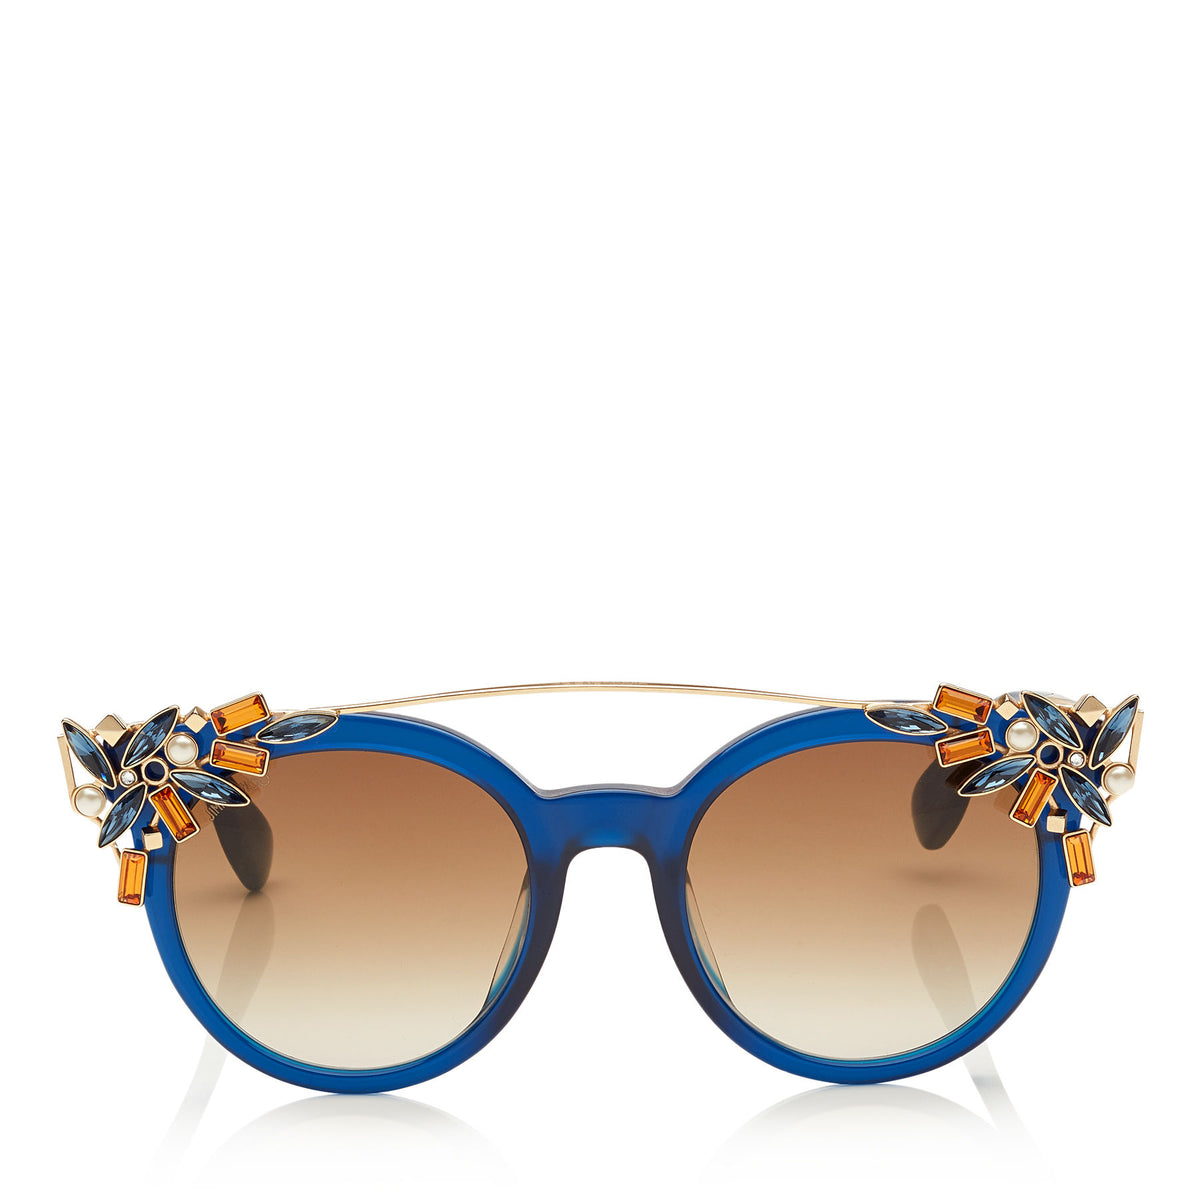 JIMMY CHOO Vivy Blue and Gold Round Framed Sunglasses with Detachable Jewel Clip On ITEM NO. VIVYS51E1UN